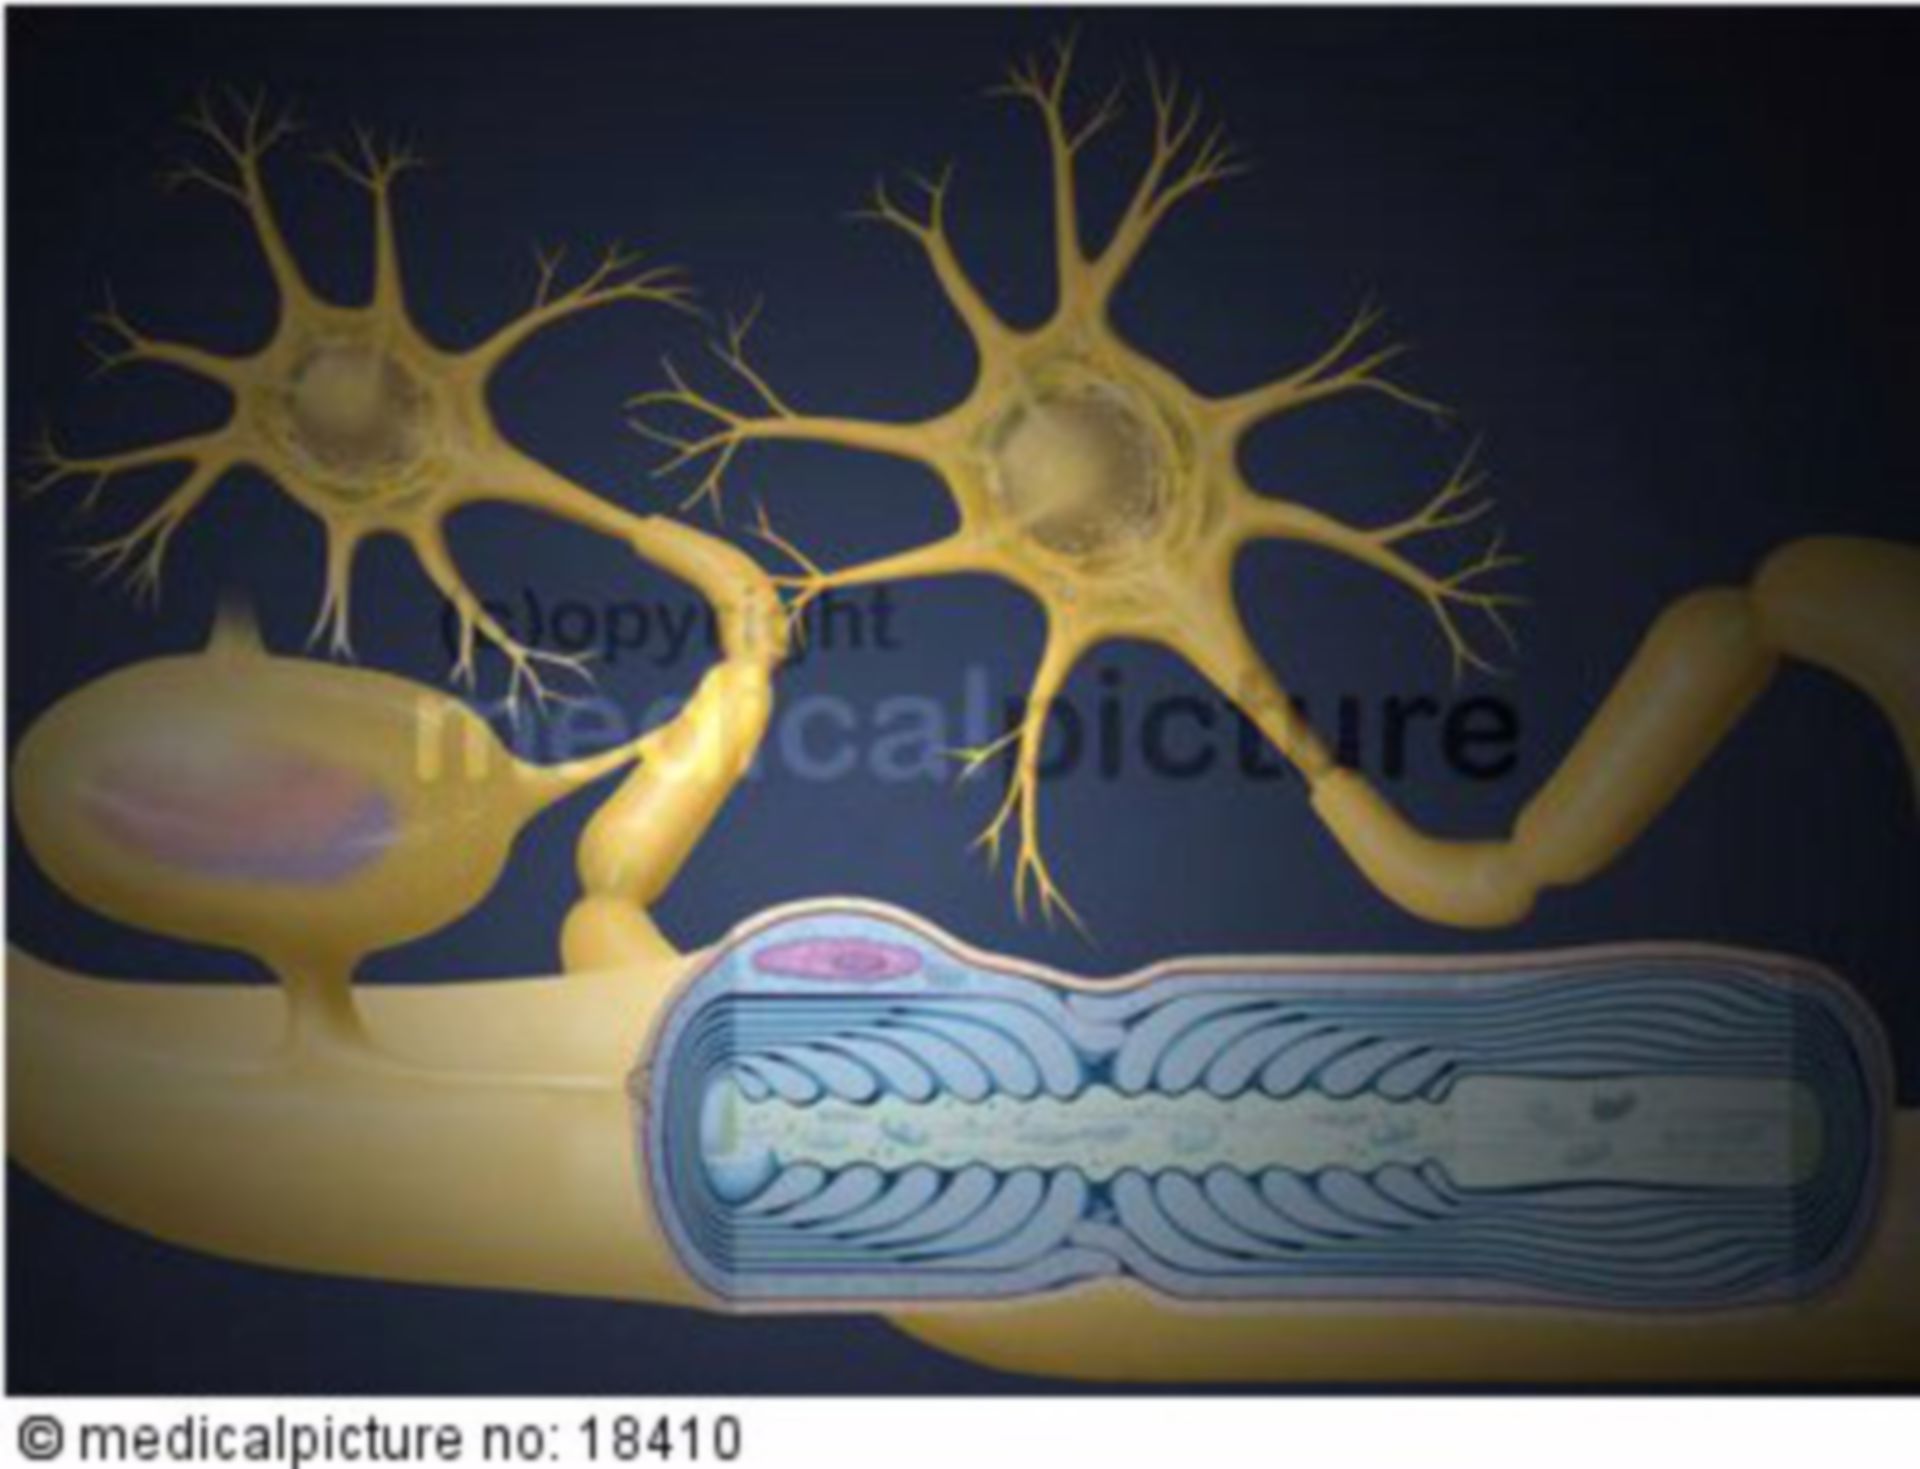 Nerve cell, multipolar